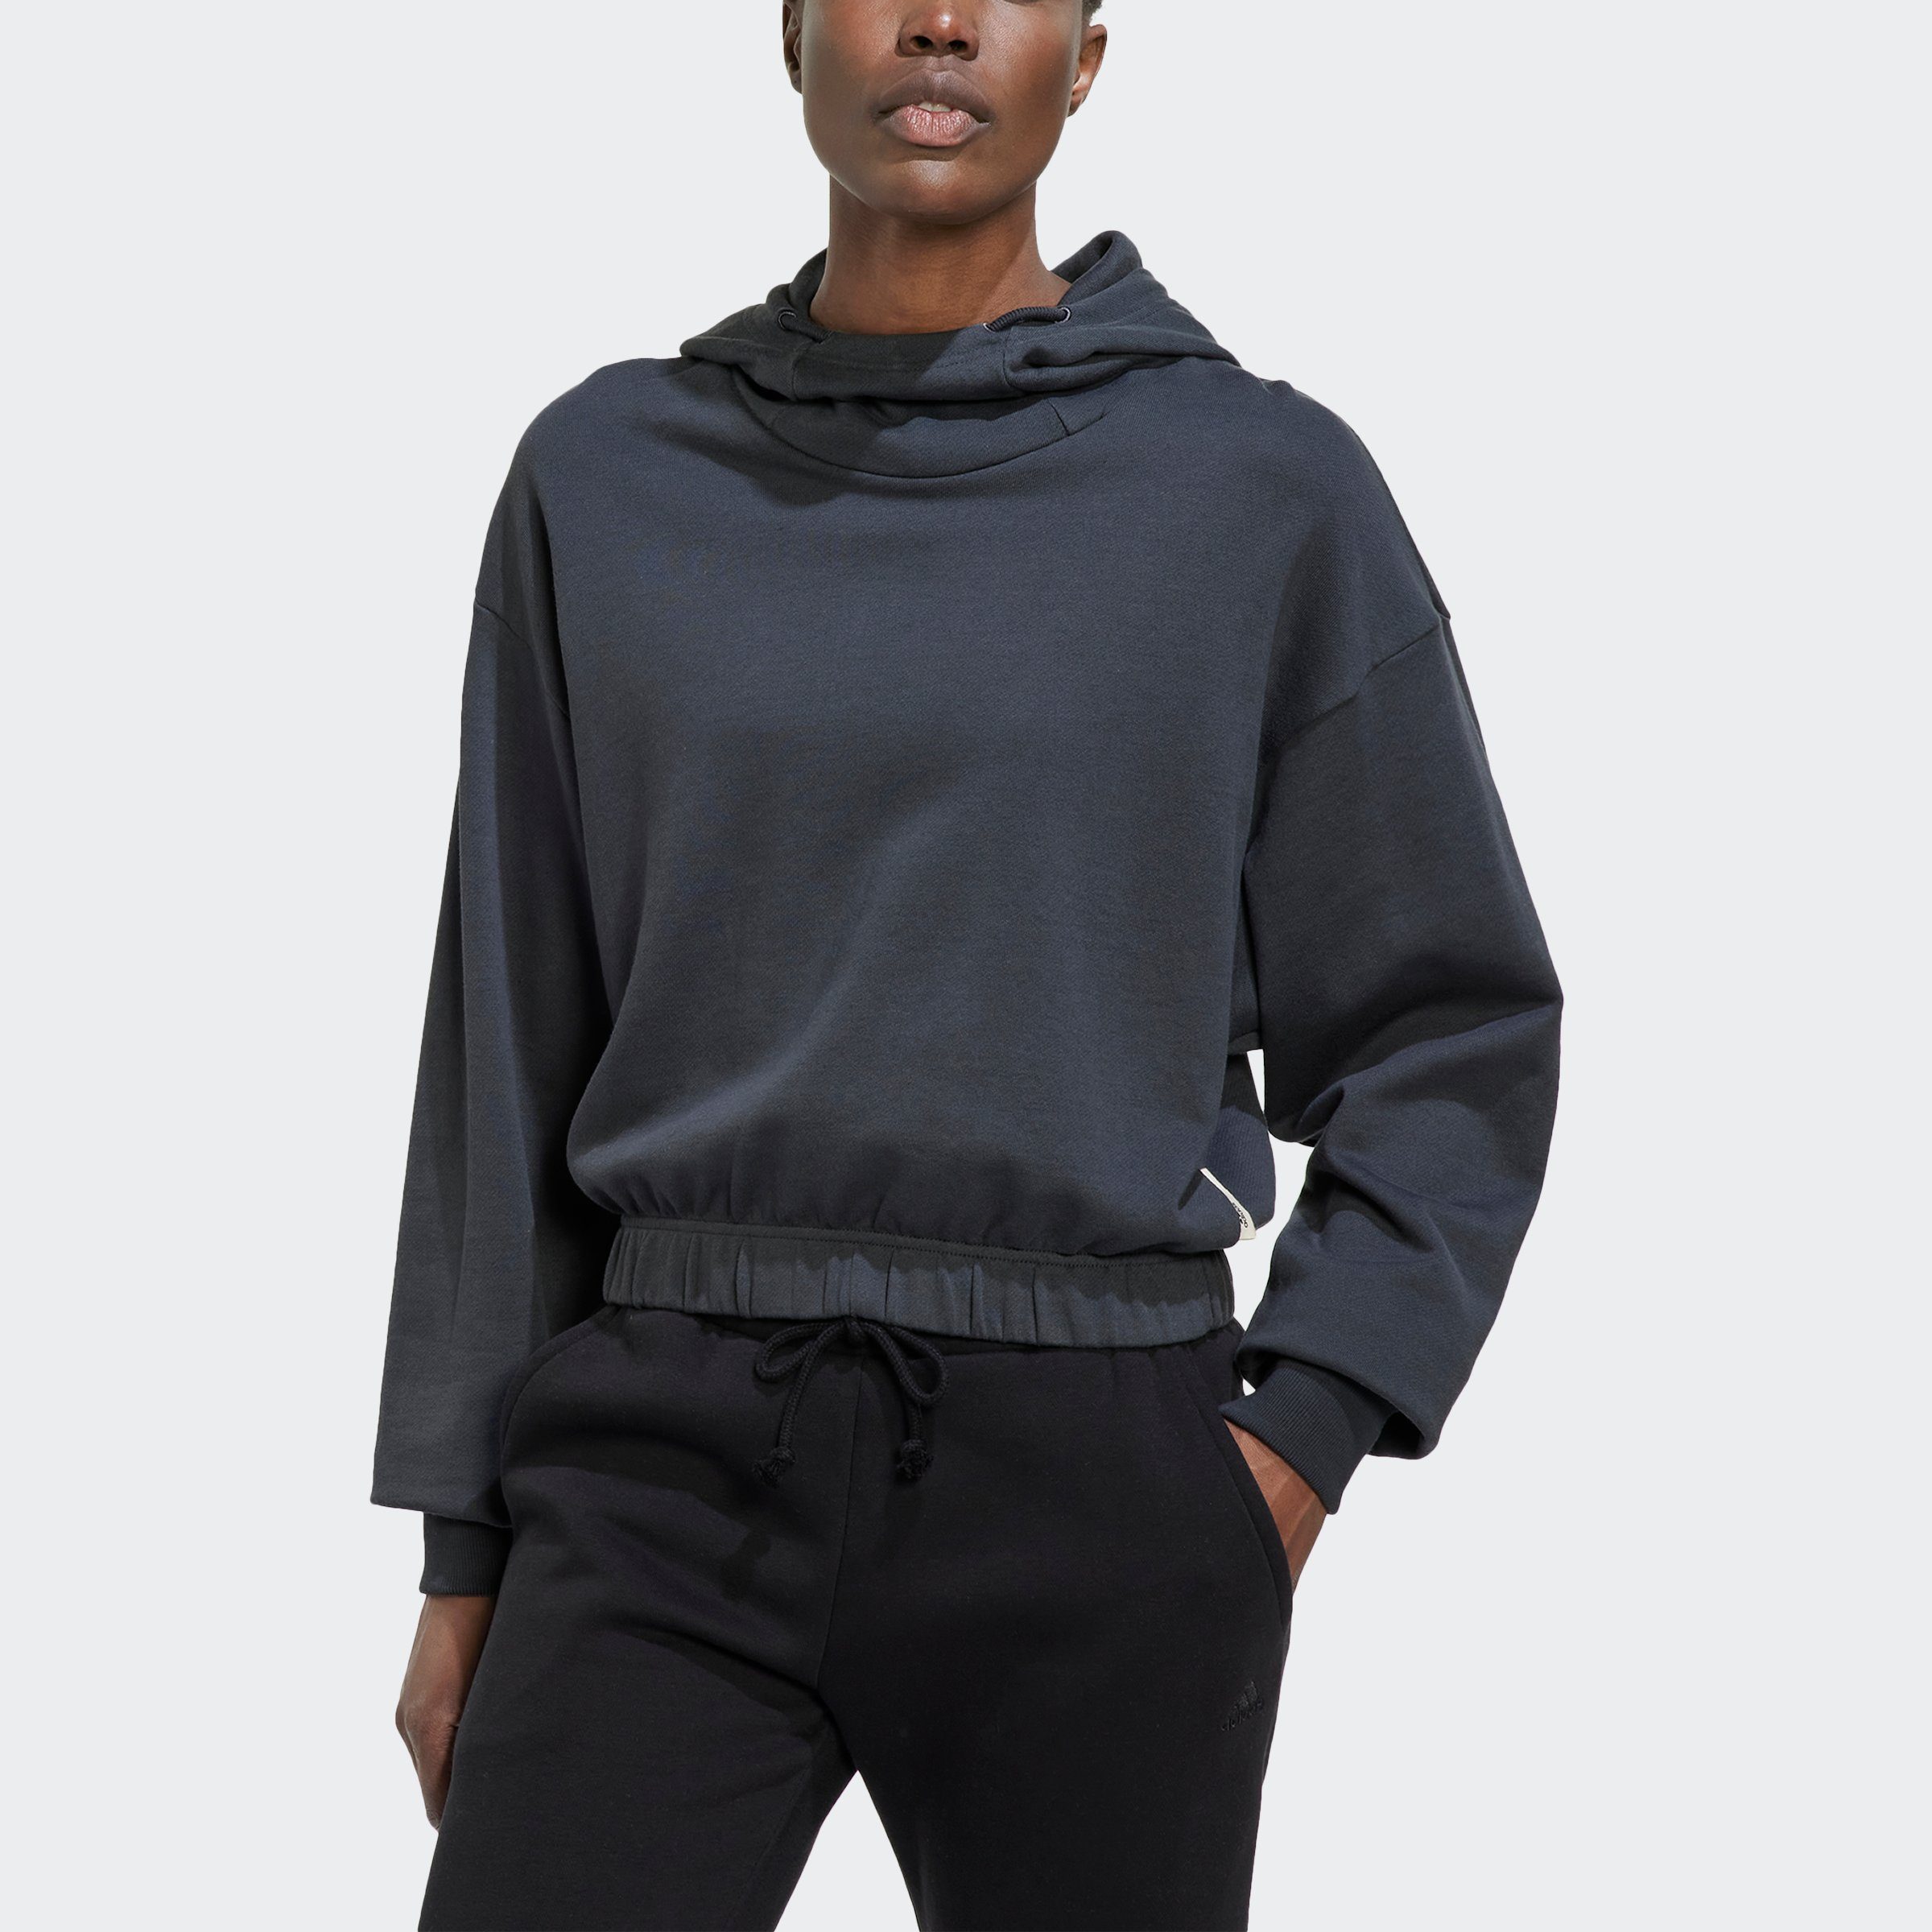 HOODIE CROPPED STUDIO Sportswear CARBON Sweatshirt LOUNGE adidas